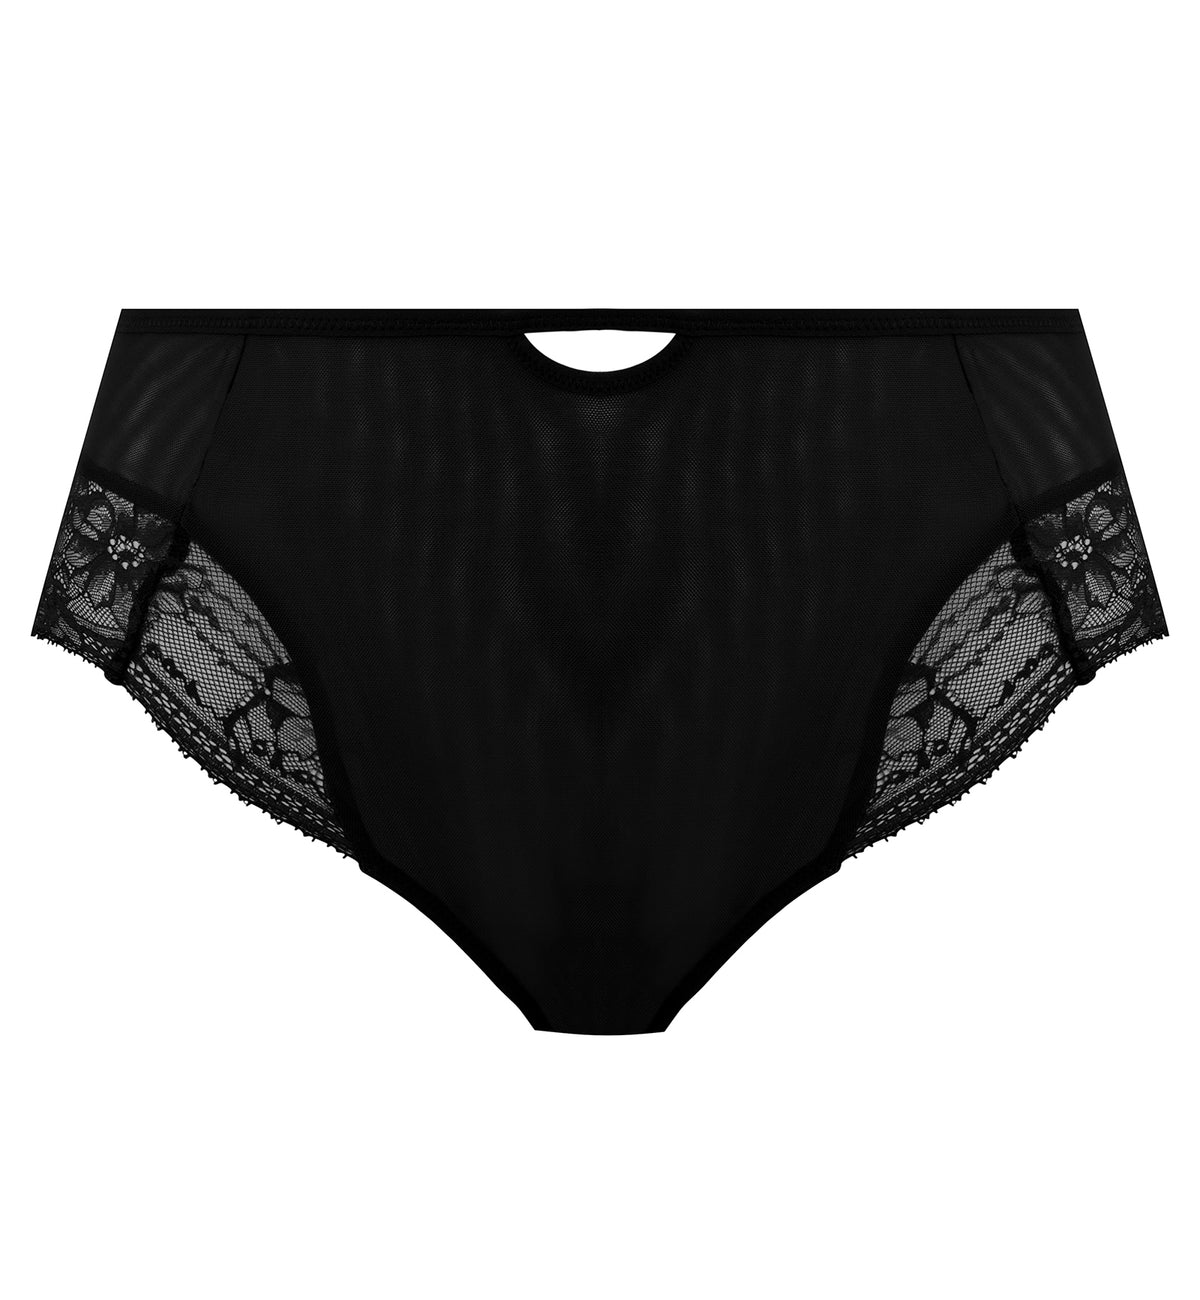 Elomi Kendra Full Brief Panty (301651),Medium,Black - Black,Medium